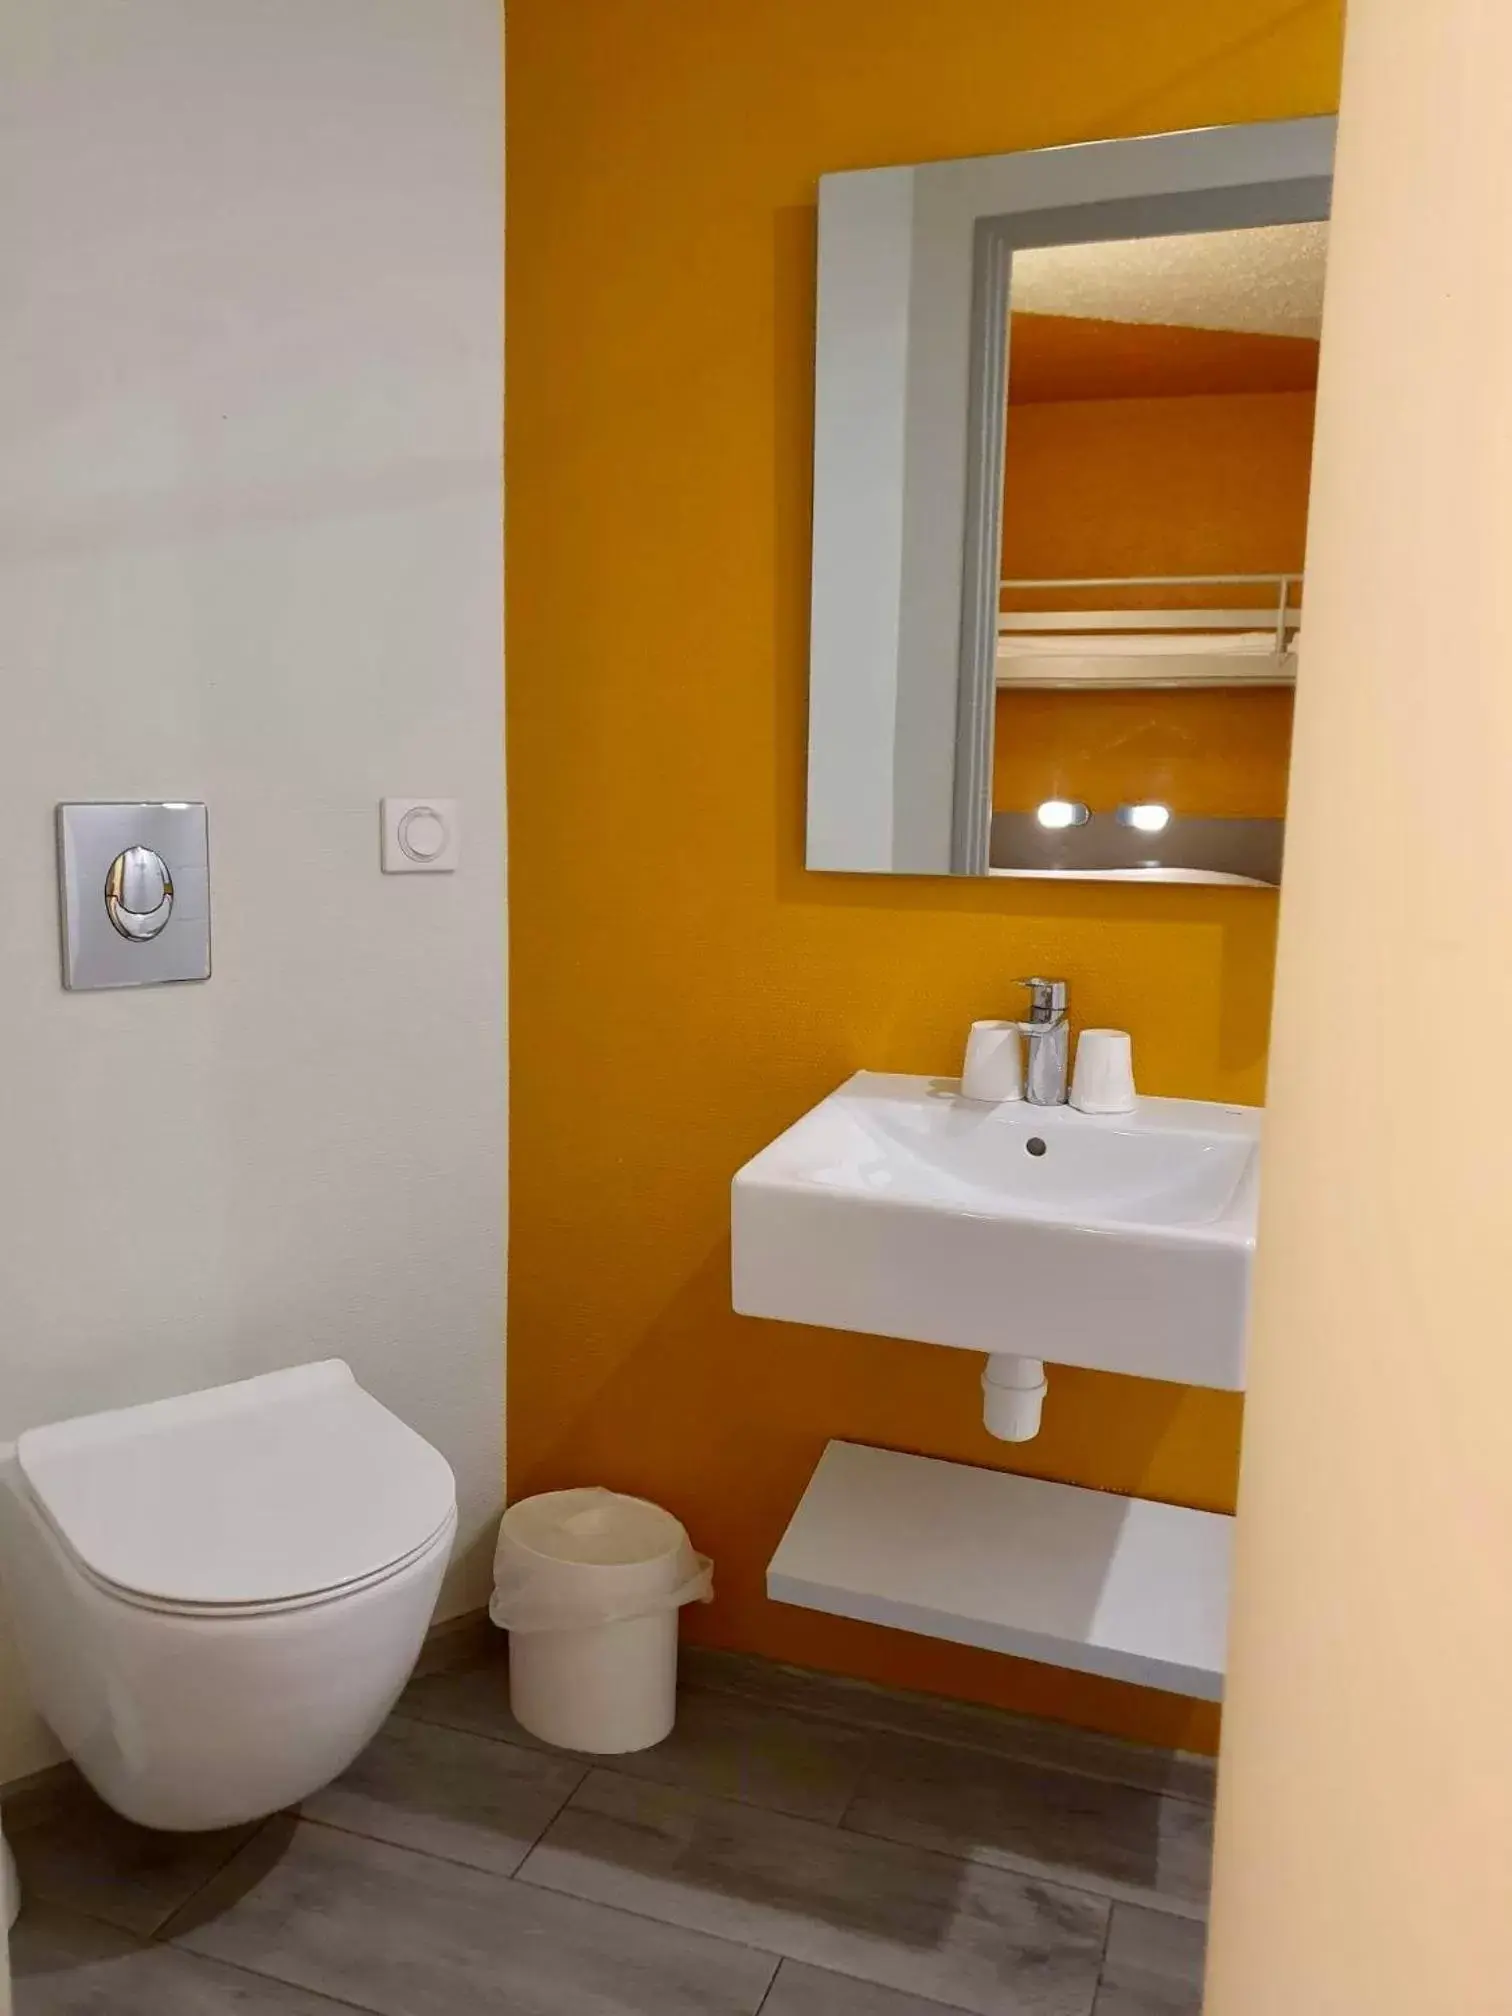 Bathroom in Cit'hotel Design Booking Evry Saint-Germain-lès-Corbeil Sénart